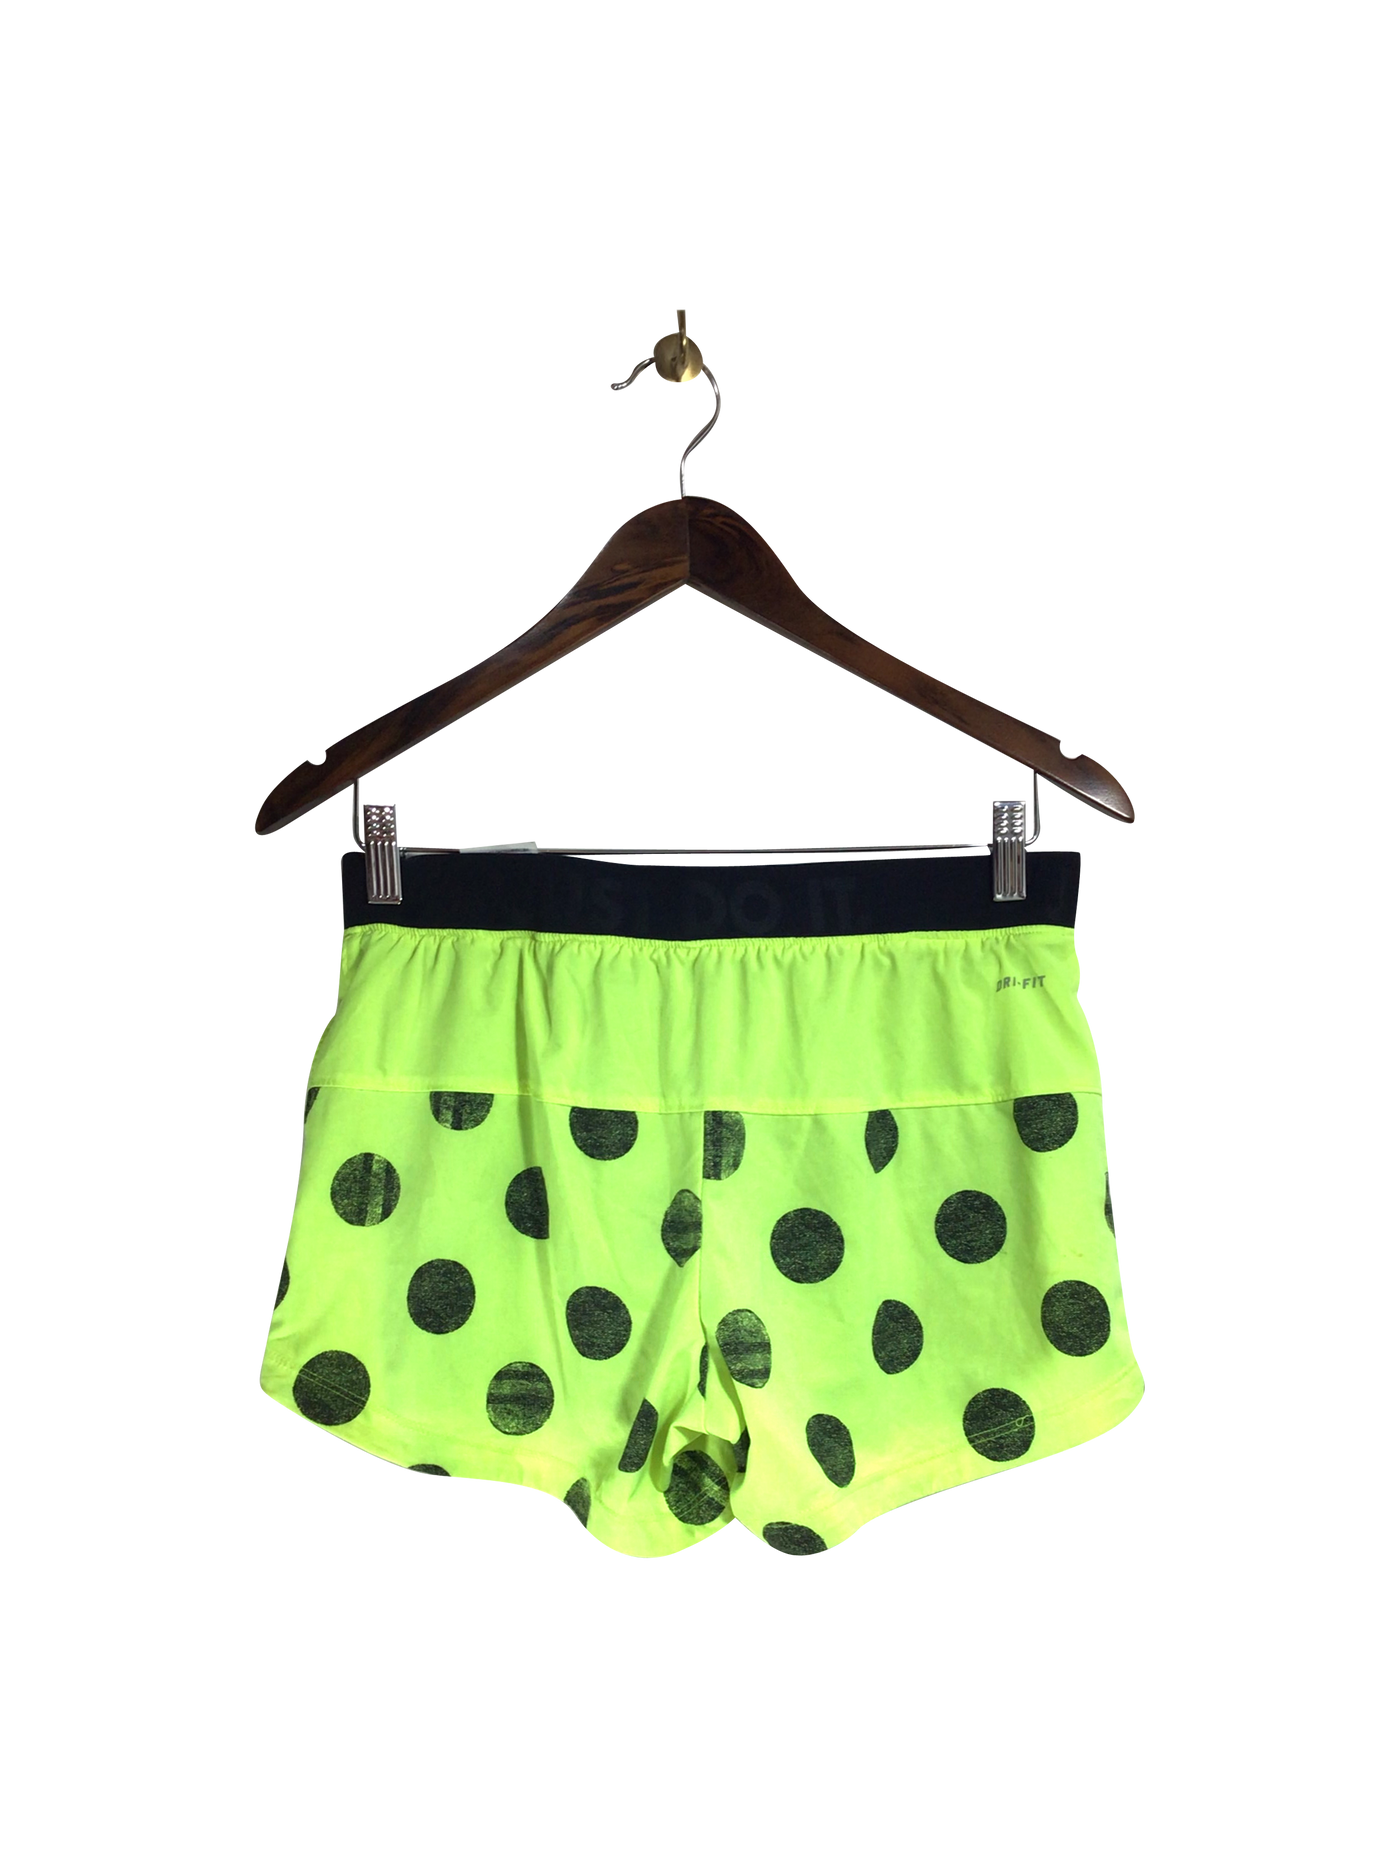 NIKE Women Classic Shorts Regular fit in Green - Size S | 11.99 $ KOOP